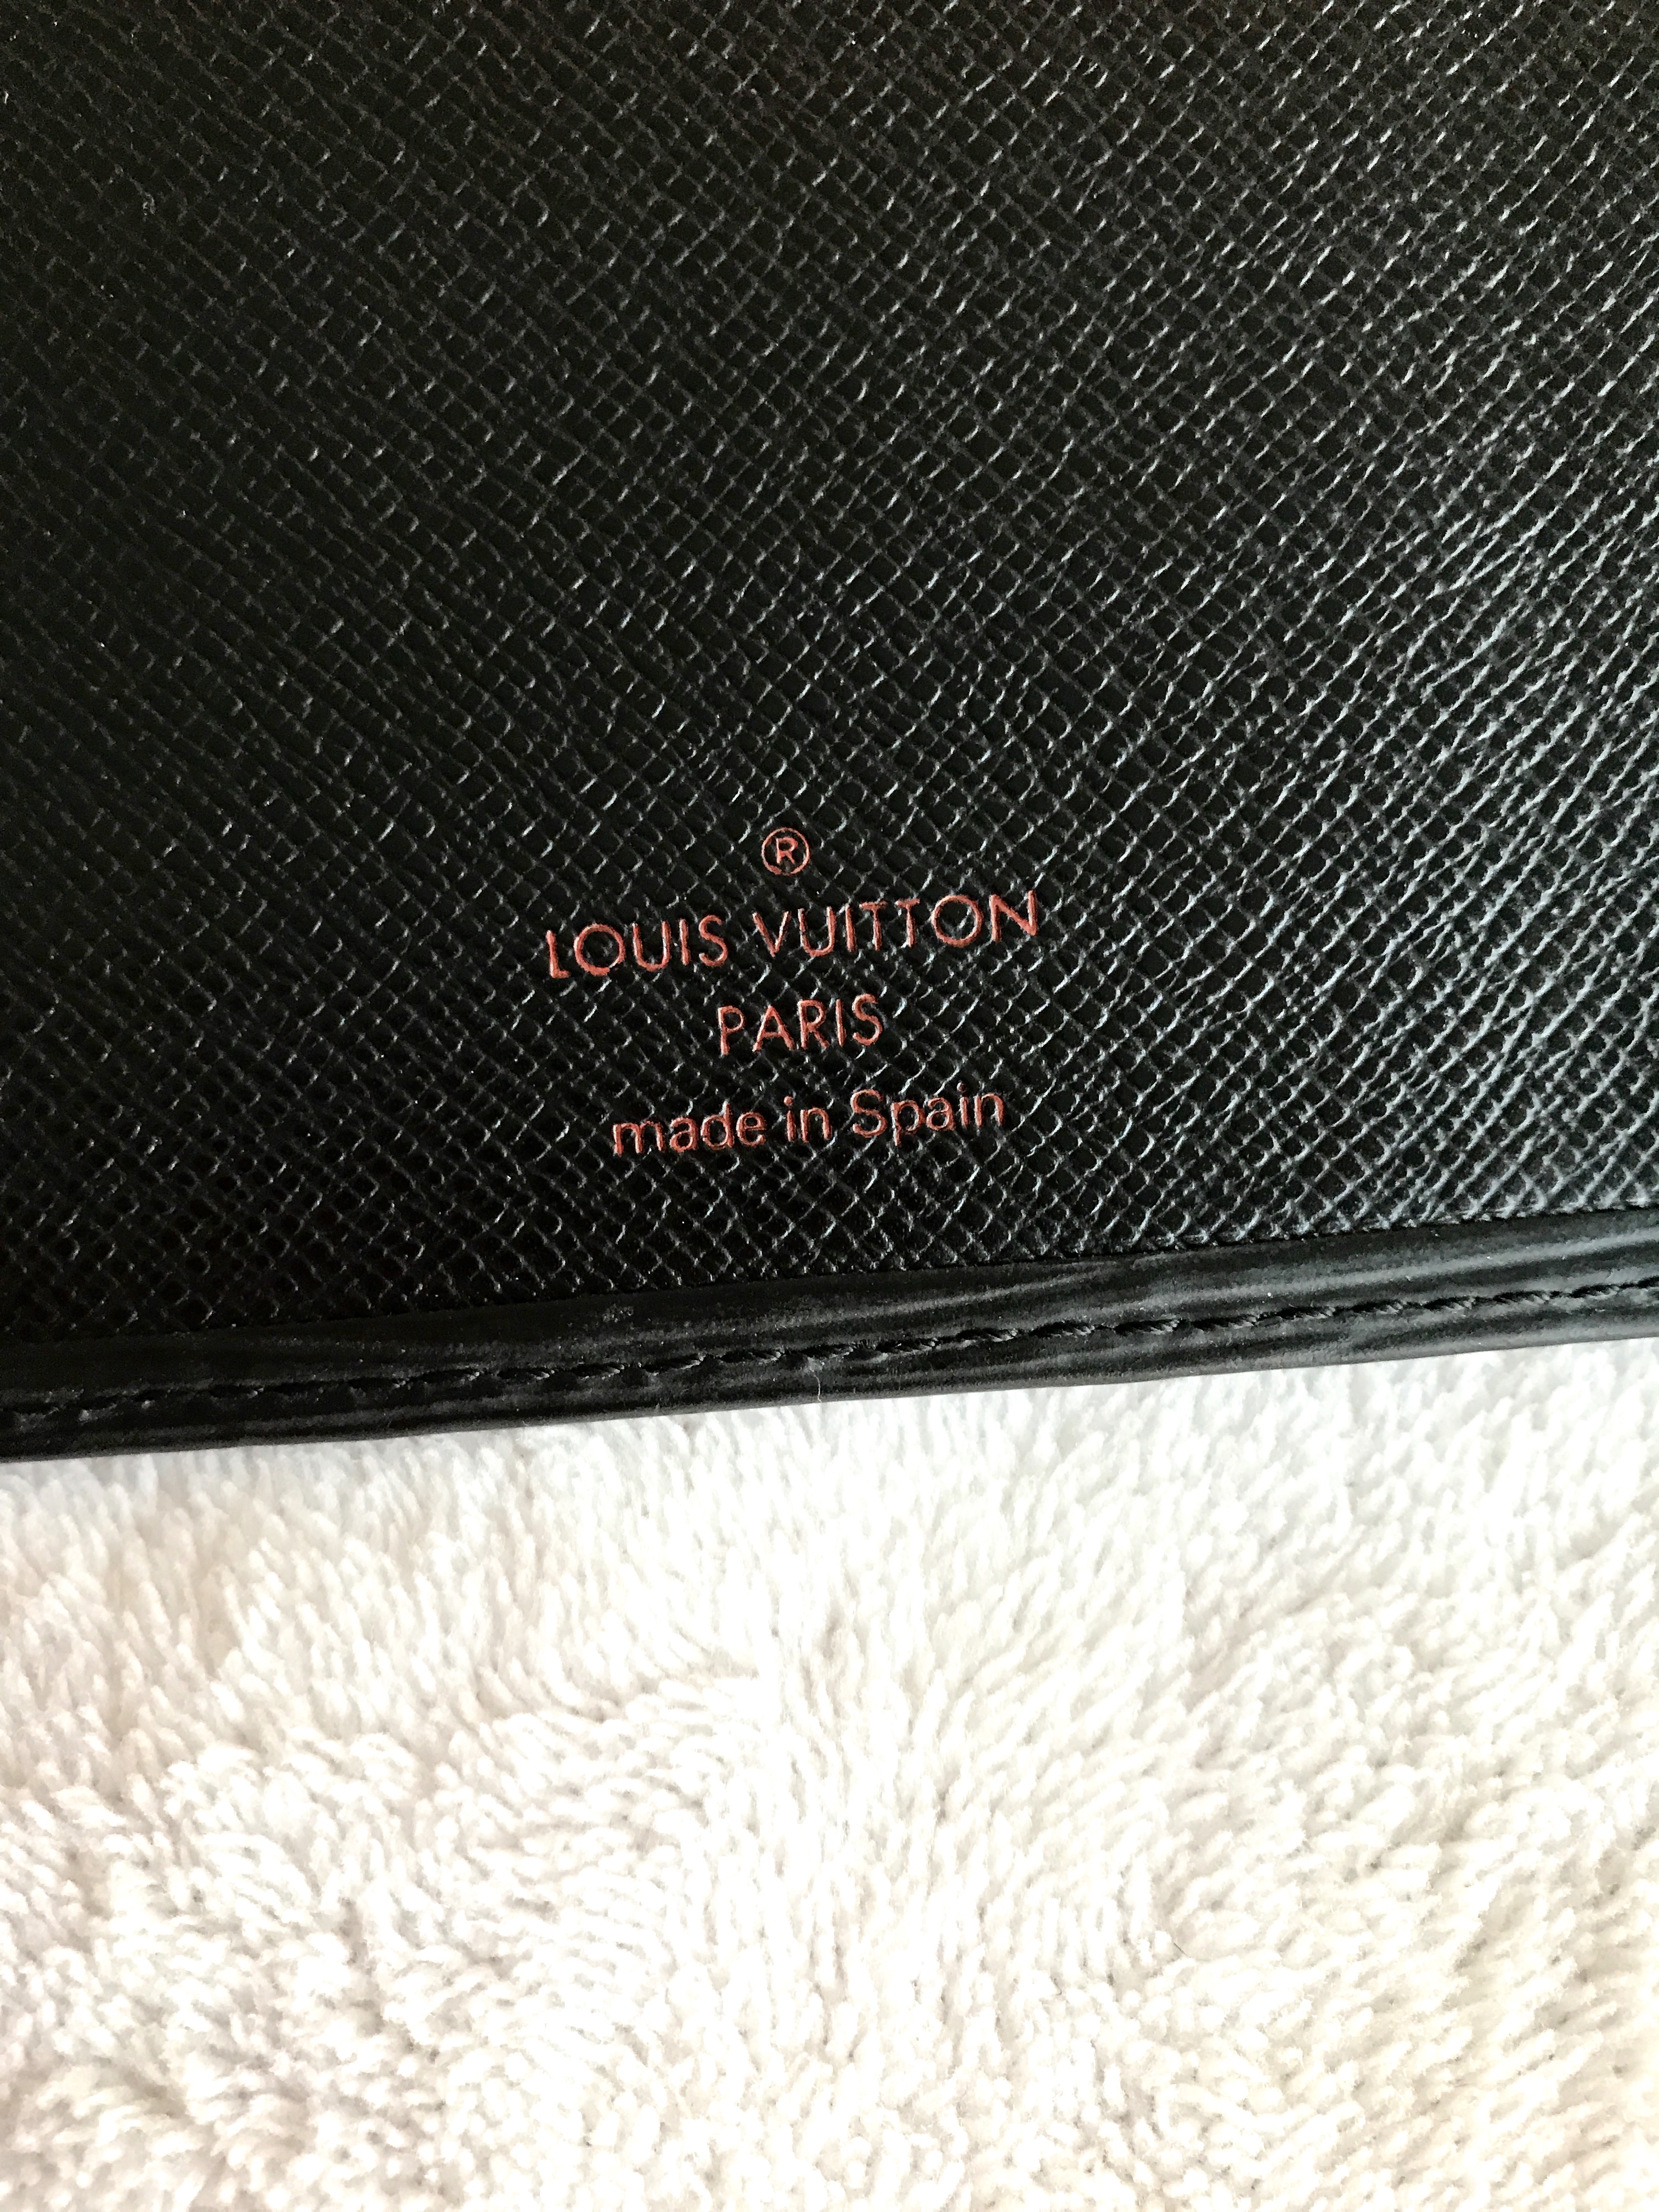 Siopaella Ltd. - We have this Louis Vuitton black epi leather